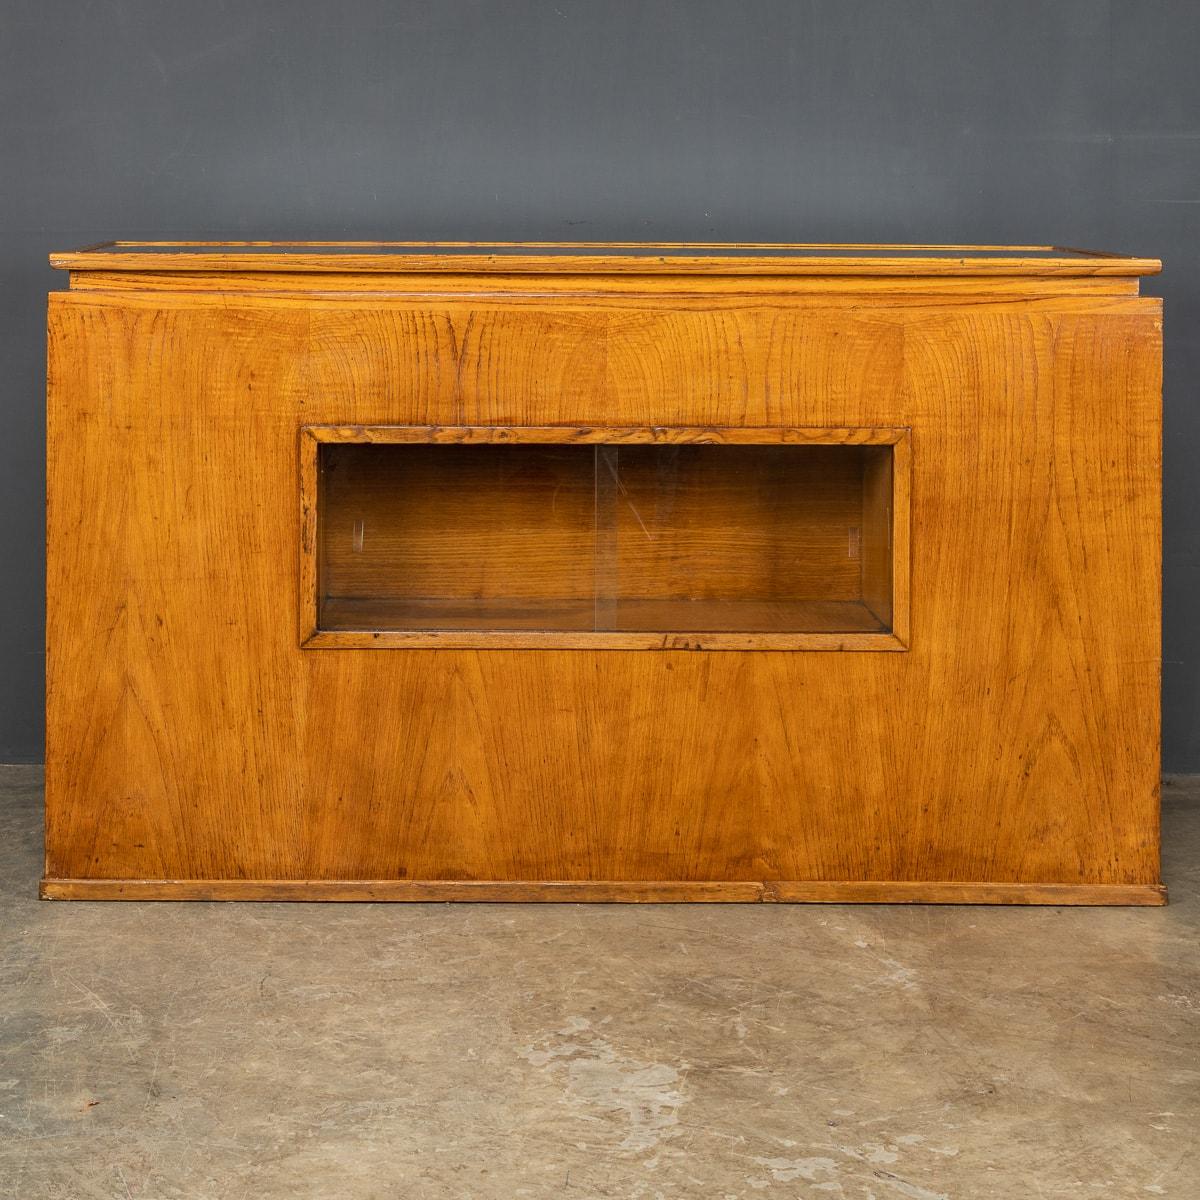 British 20th Century Enlish Oak Haberdashery Counter / Sideboard, C.1920